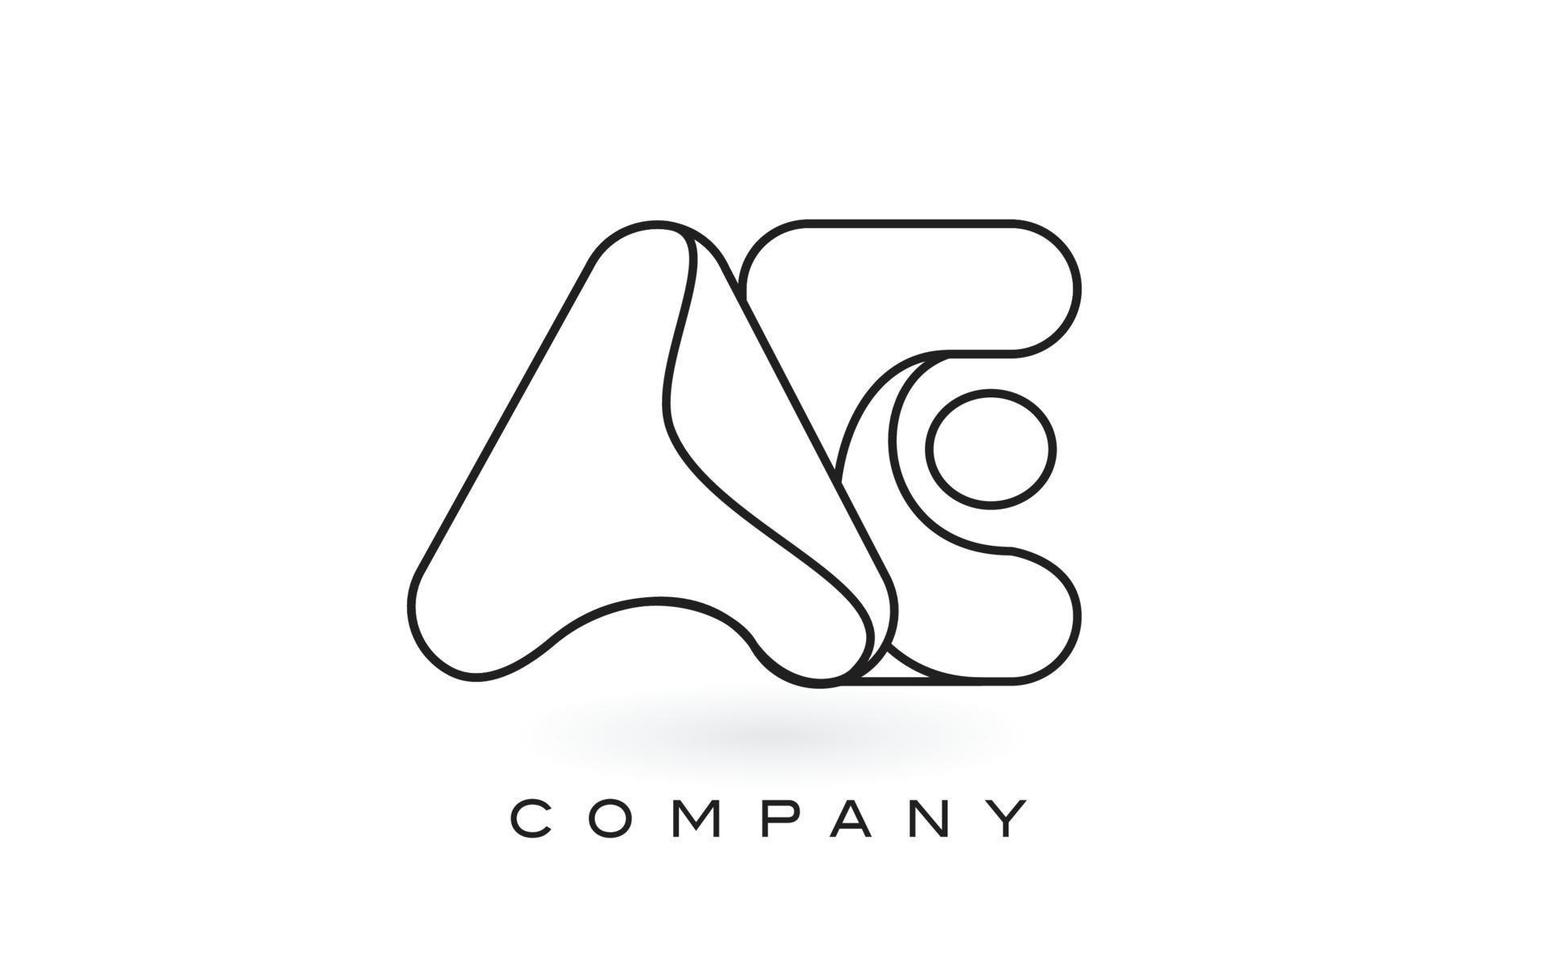 Logotipo da letra do monograma ae com contorno fino do contorno do monograma preto. vetor de design de carta na moda moderna.